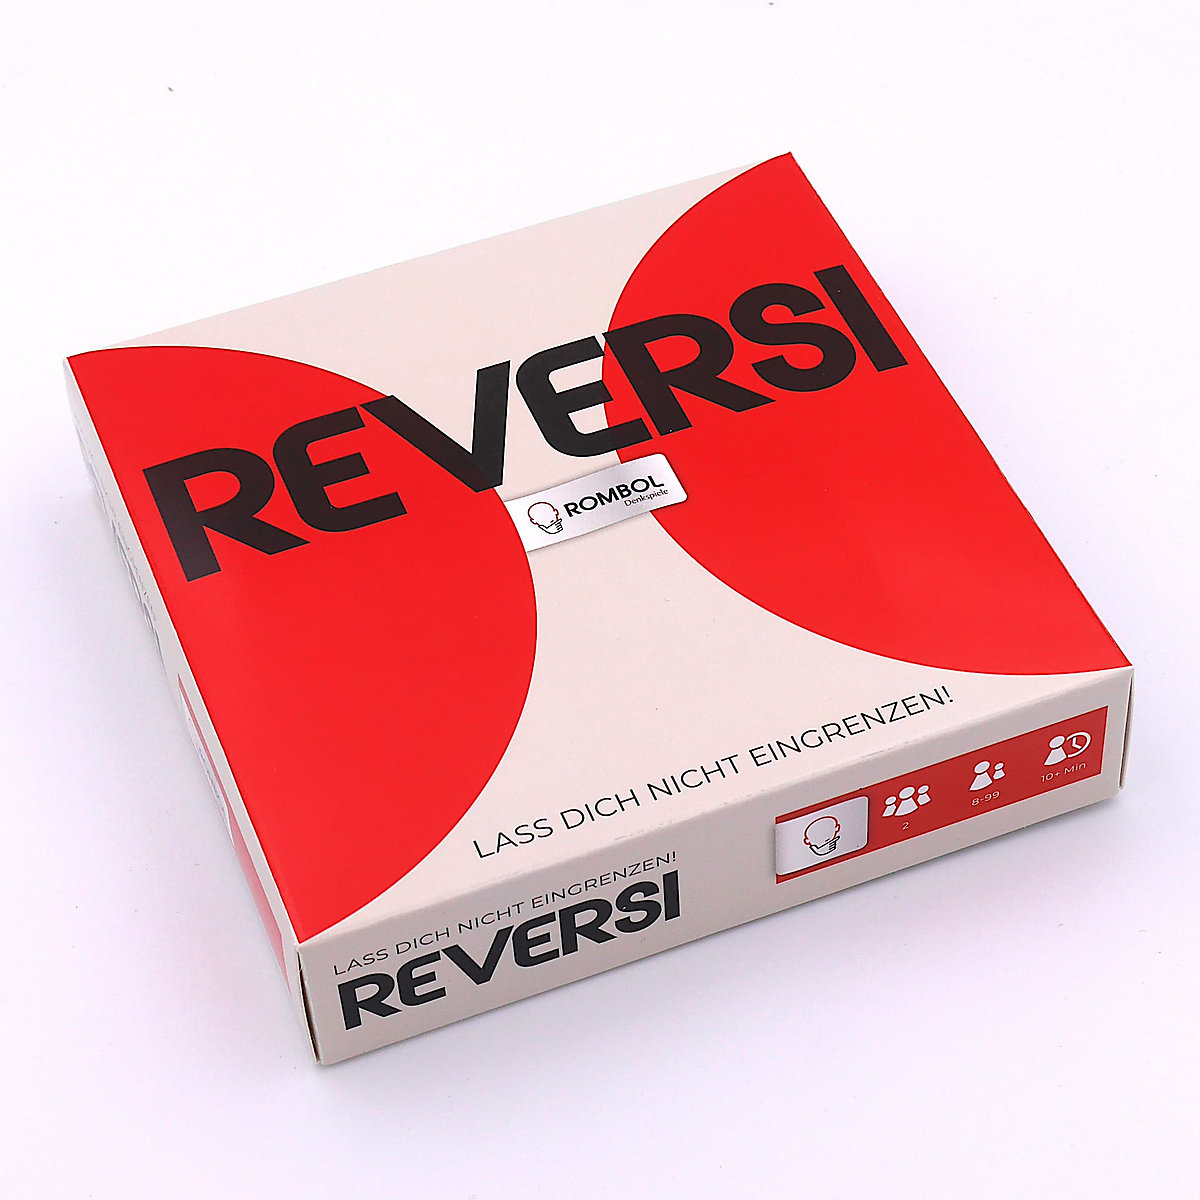 ROMBOL Reversi – Interessantes Strategiespiel für 2 Personen aus edlem Holz